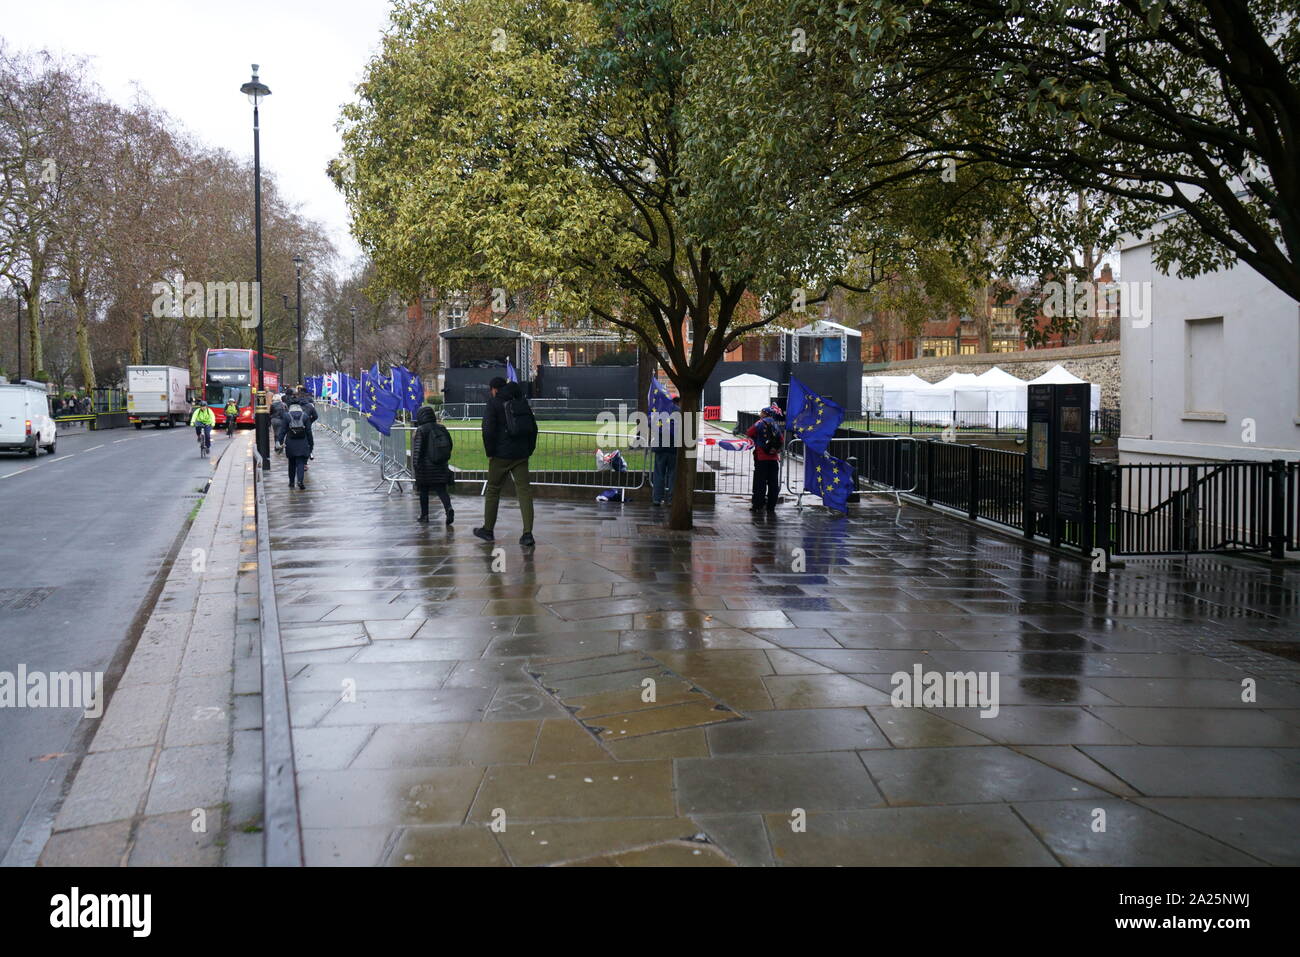 Eu flags at college green opposite the uk parliament. march 2019, protest demanding a fresh eu referendum Stock Photo